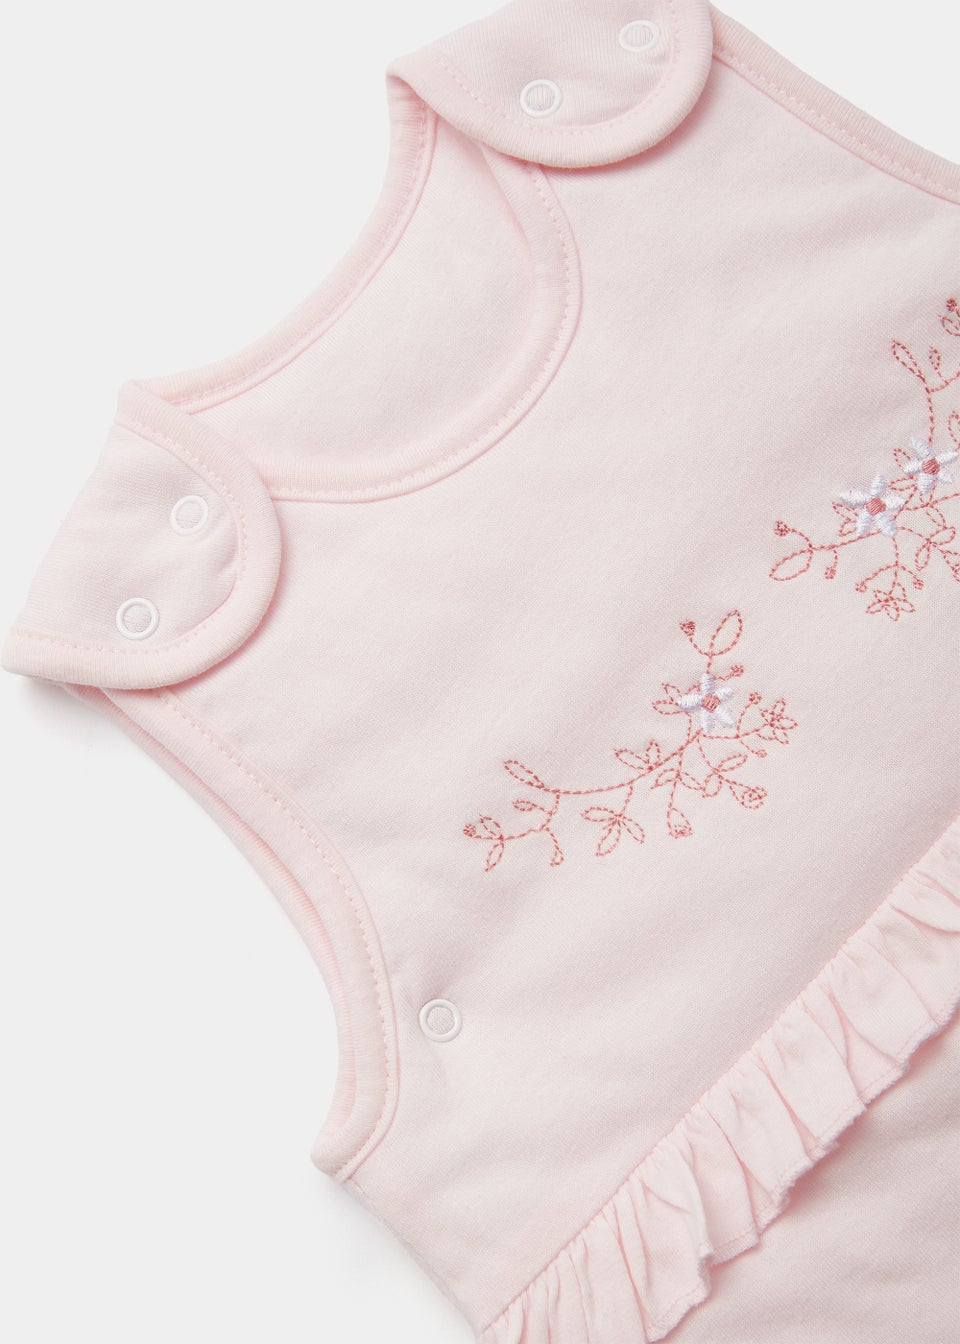 Pink Layette Baby Sleeping Bag 2.5 Tog (Newborn-18mths)